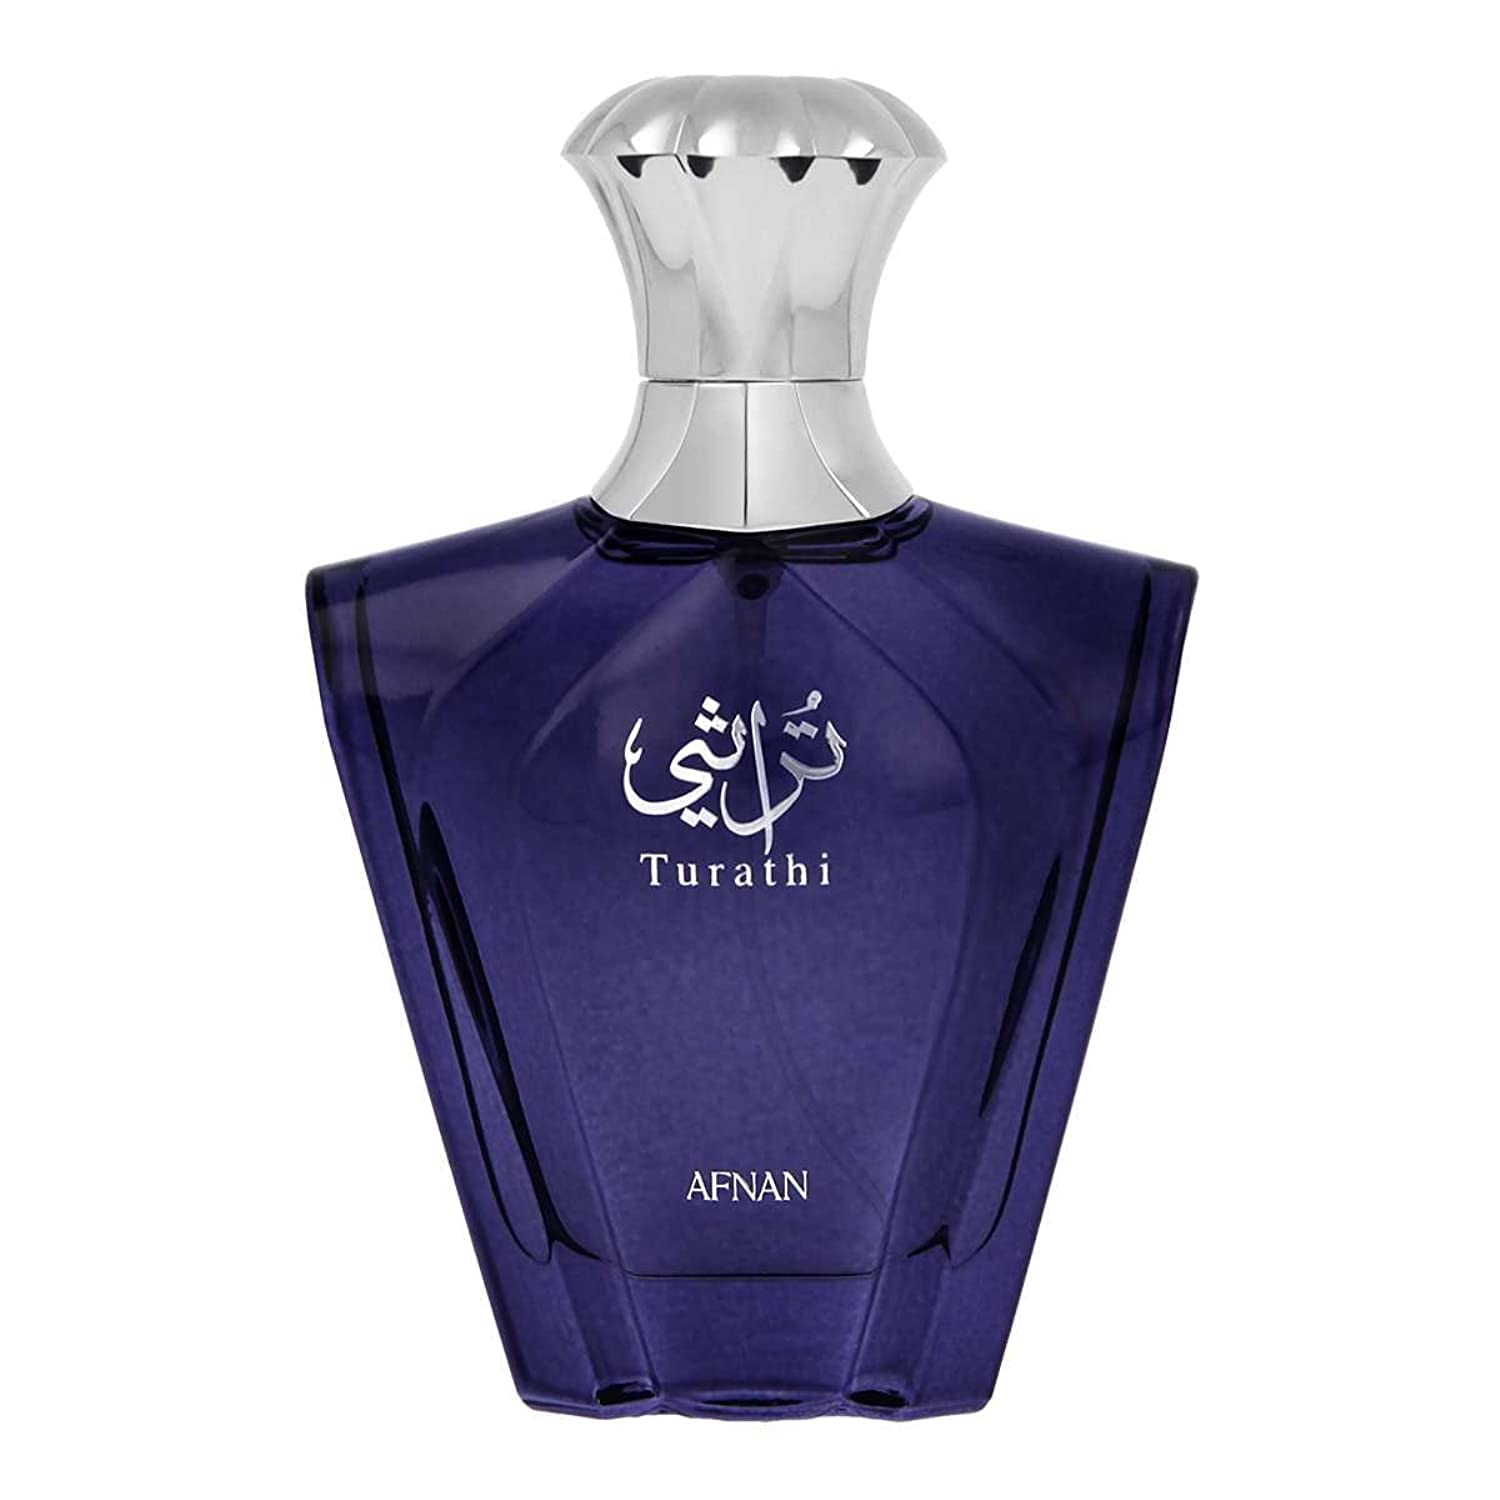 AFNAN TURATHI BLUE by Afnan Perfumes